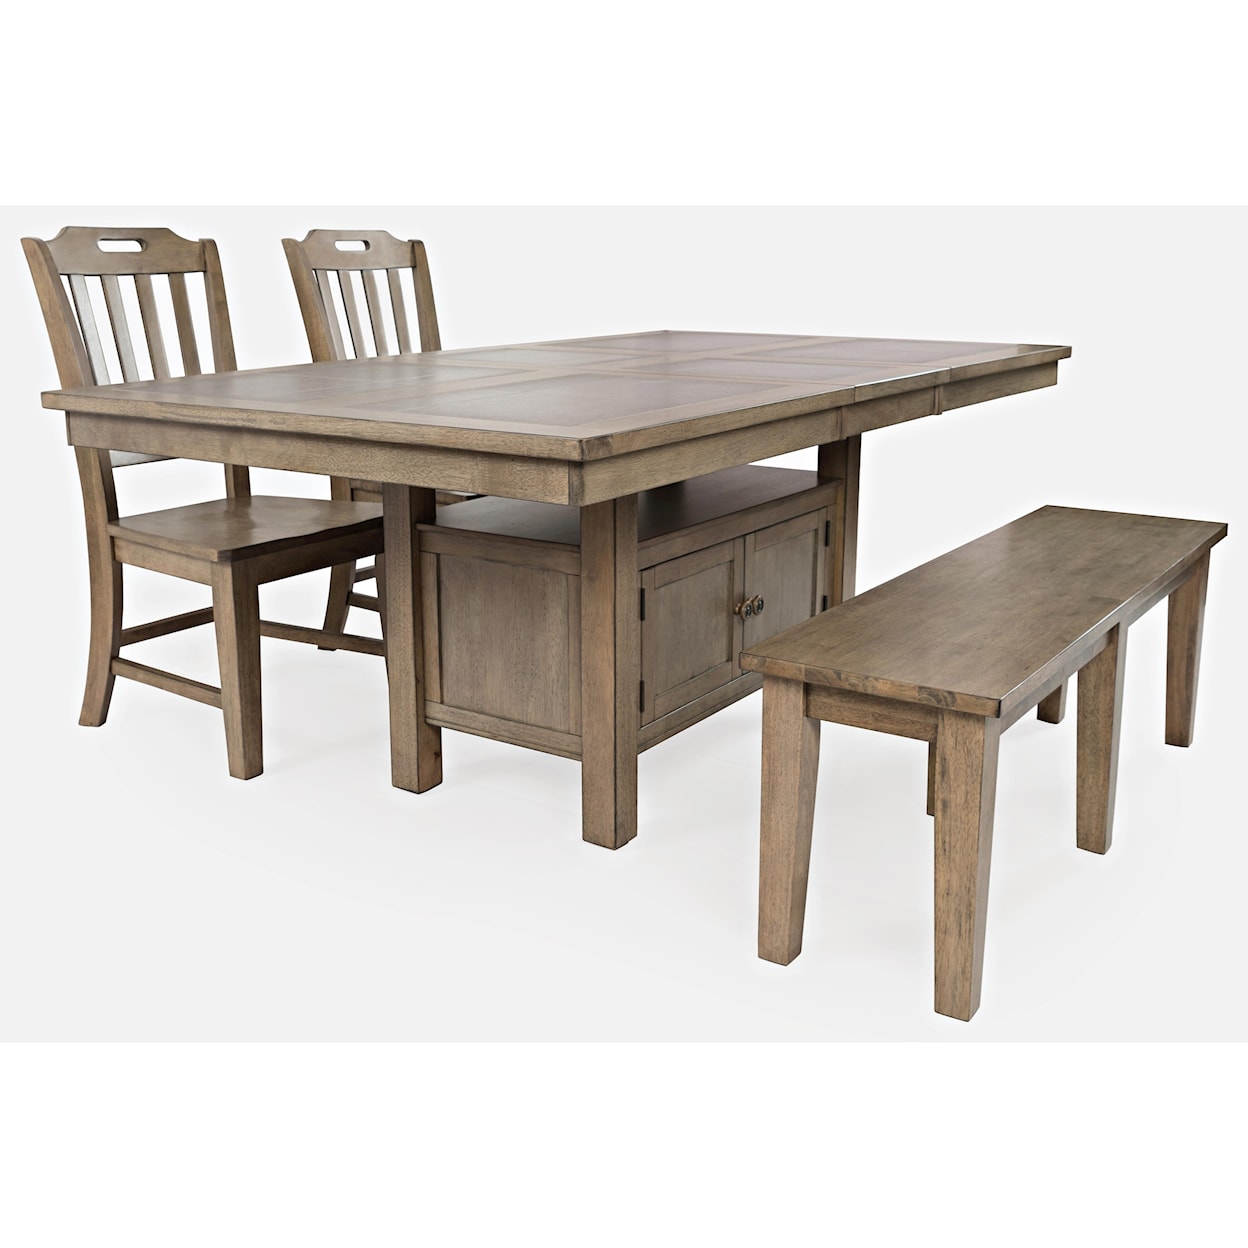 VFM Signature Prescott Park 4-Piece Dining Table and Chair Set